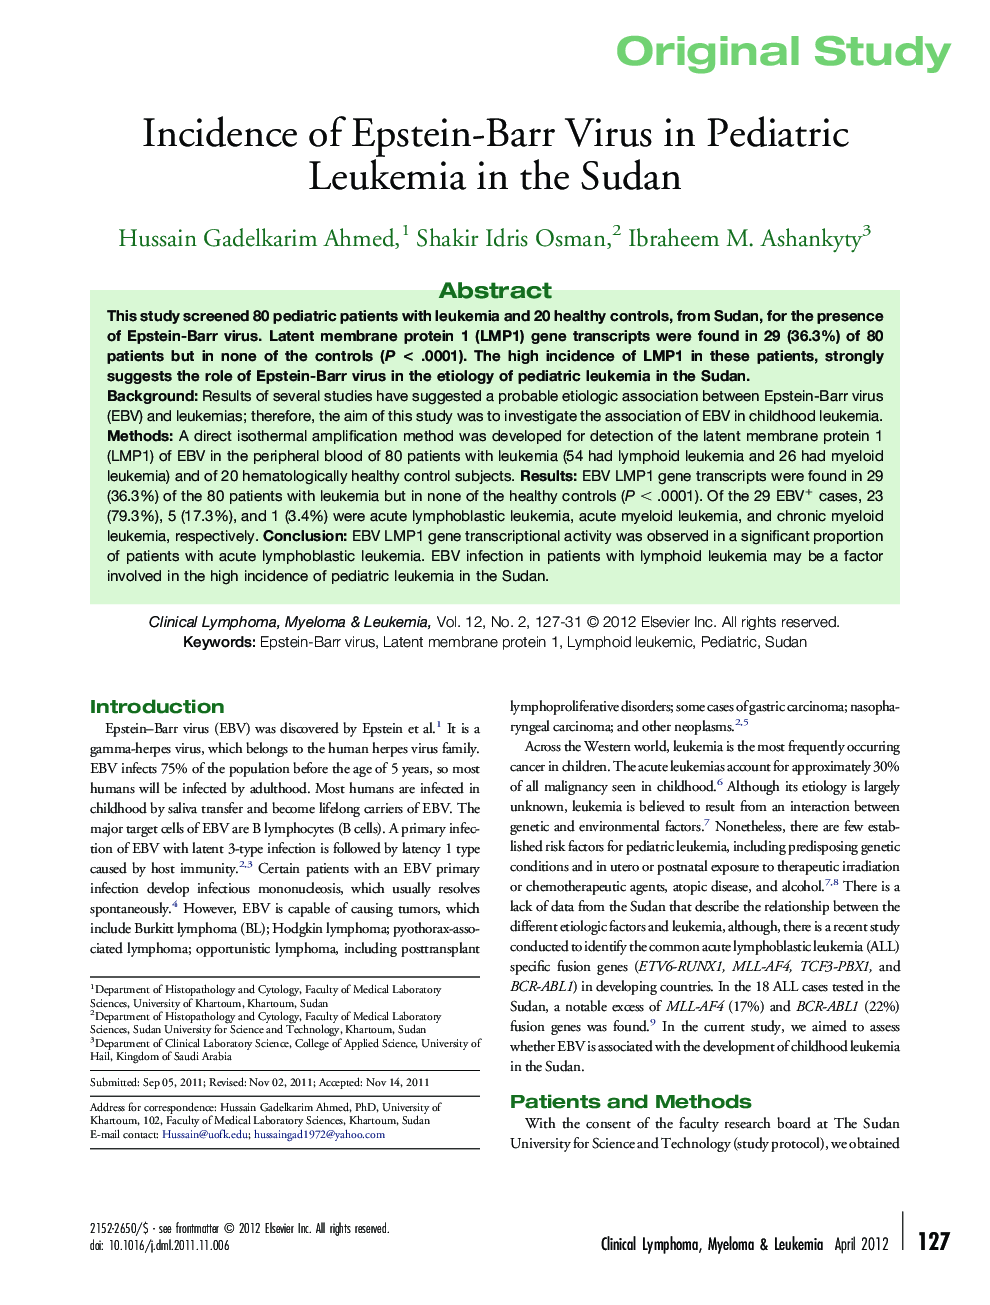 Incidence of Epstein-Barr Virus in Pediatric Leukemia in the Sudan